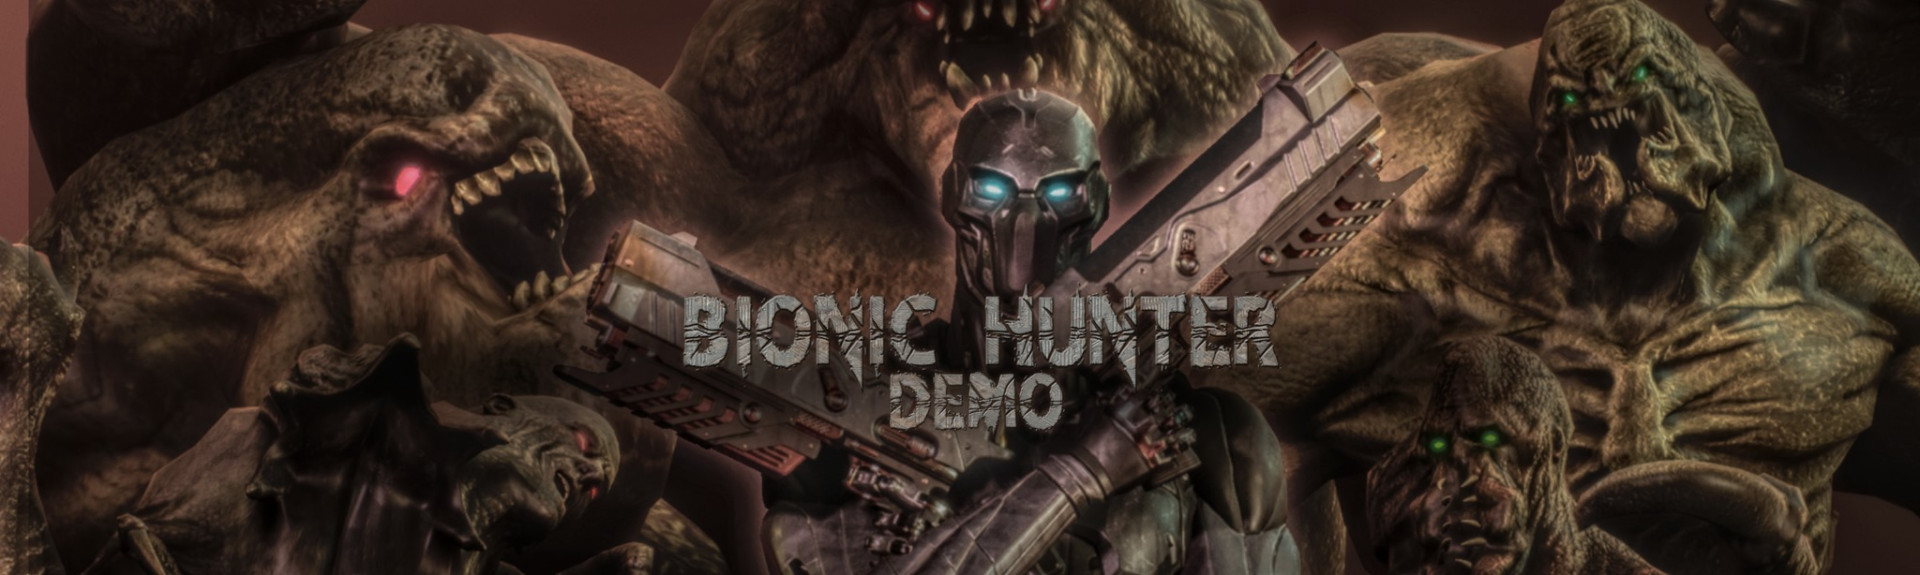 Bionic Hunter - DEMO